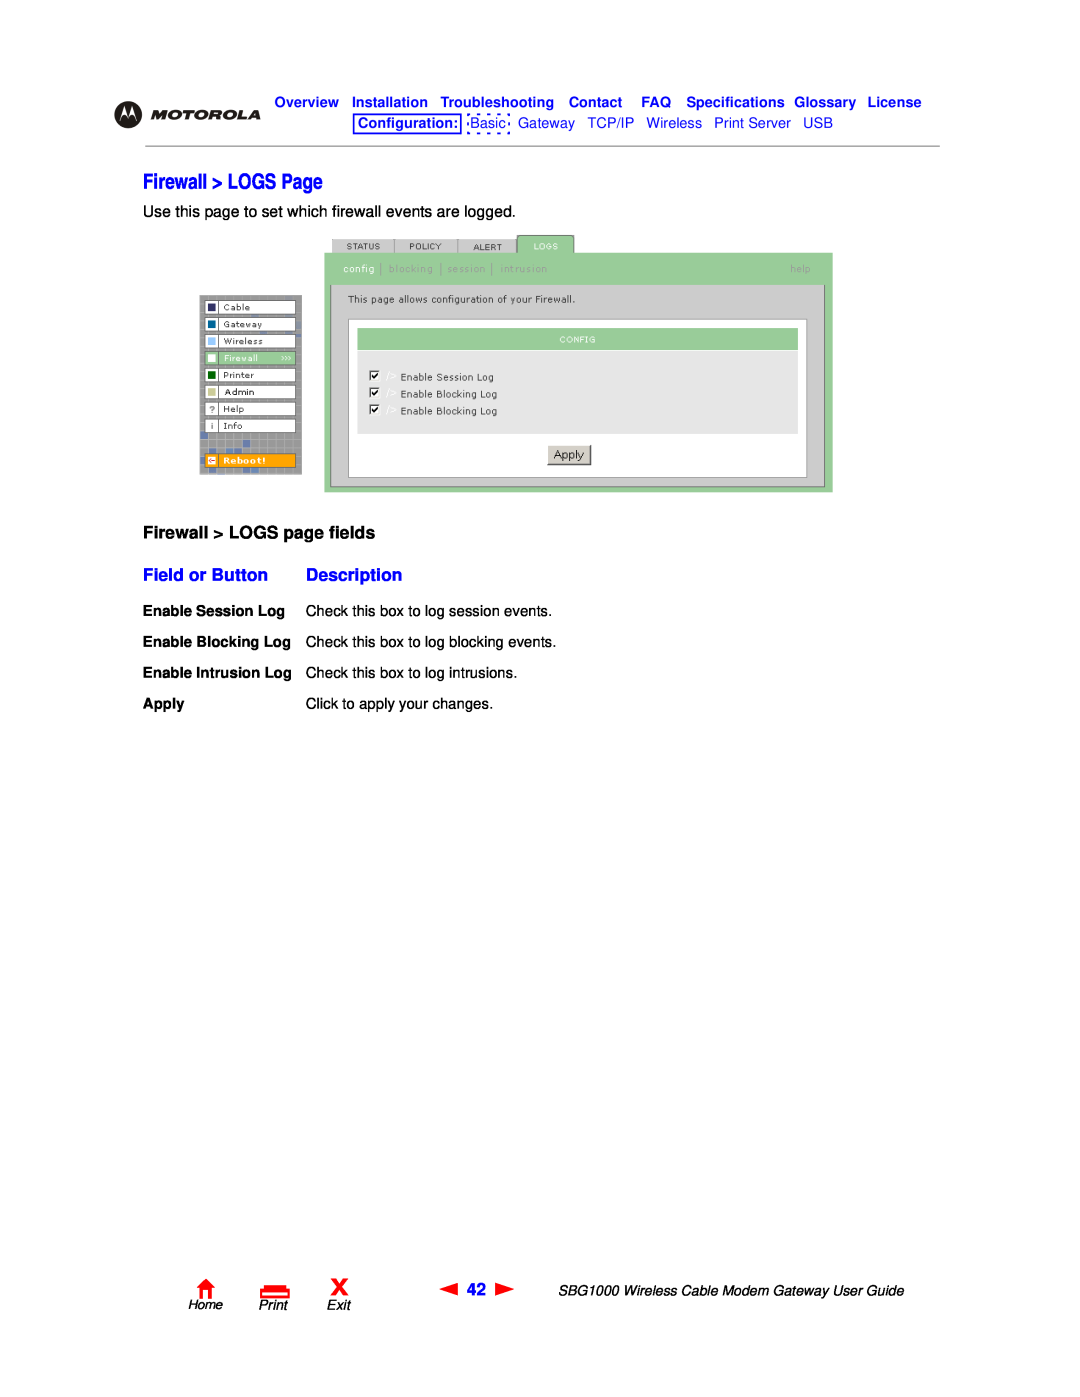 Motorola SBG1000 manual Firewall LOGS Page, Firewall LOGS page fields, Field or Button, Description, Home Print Exit 